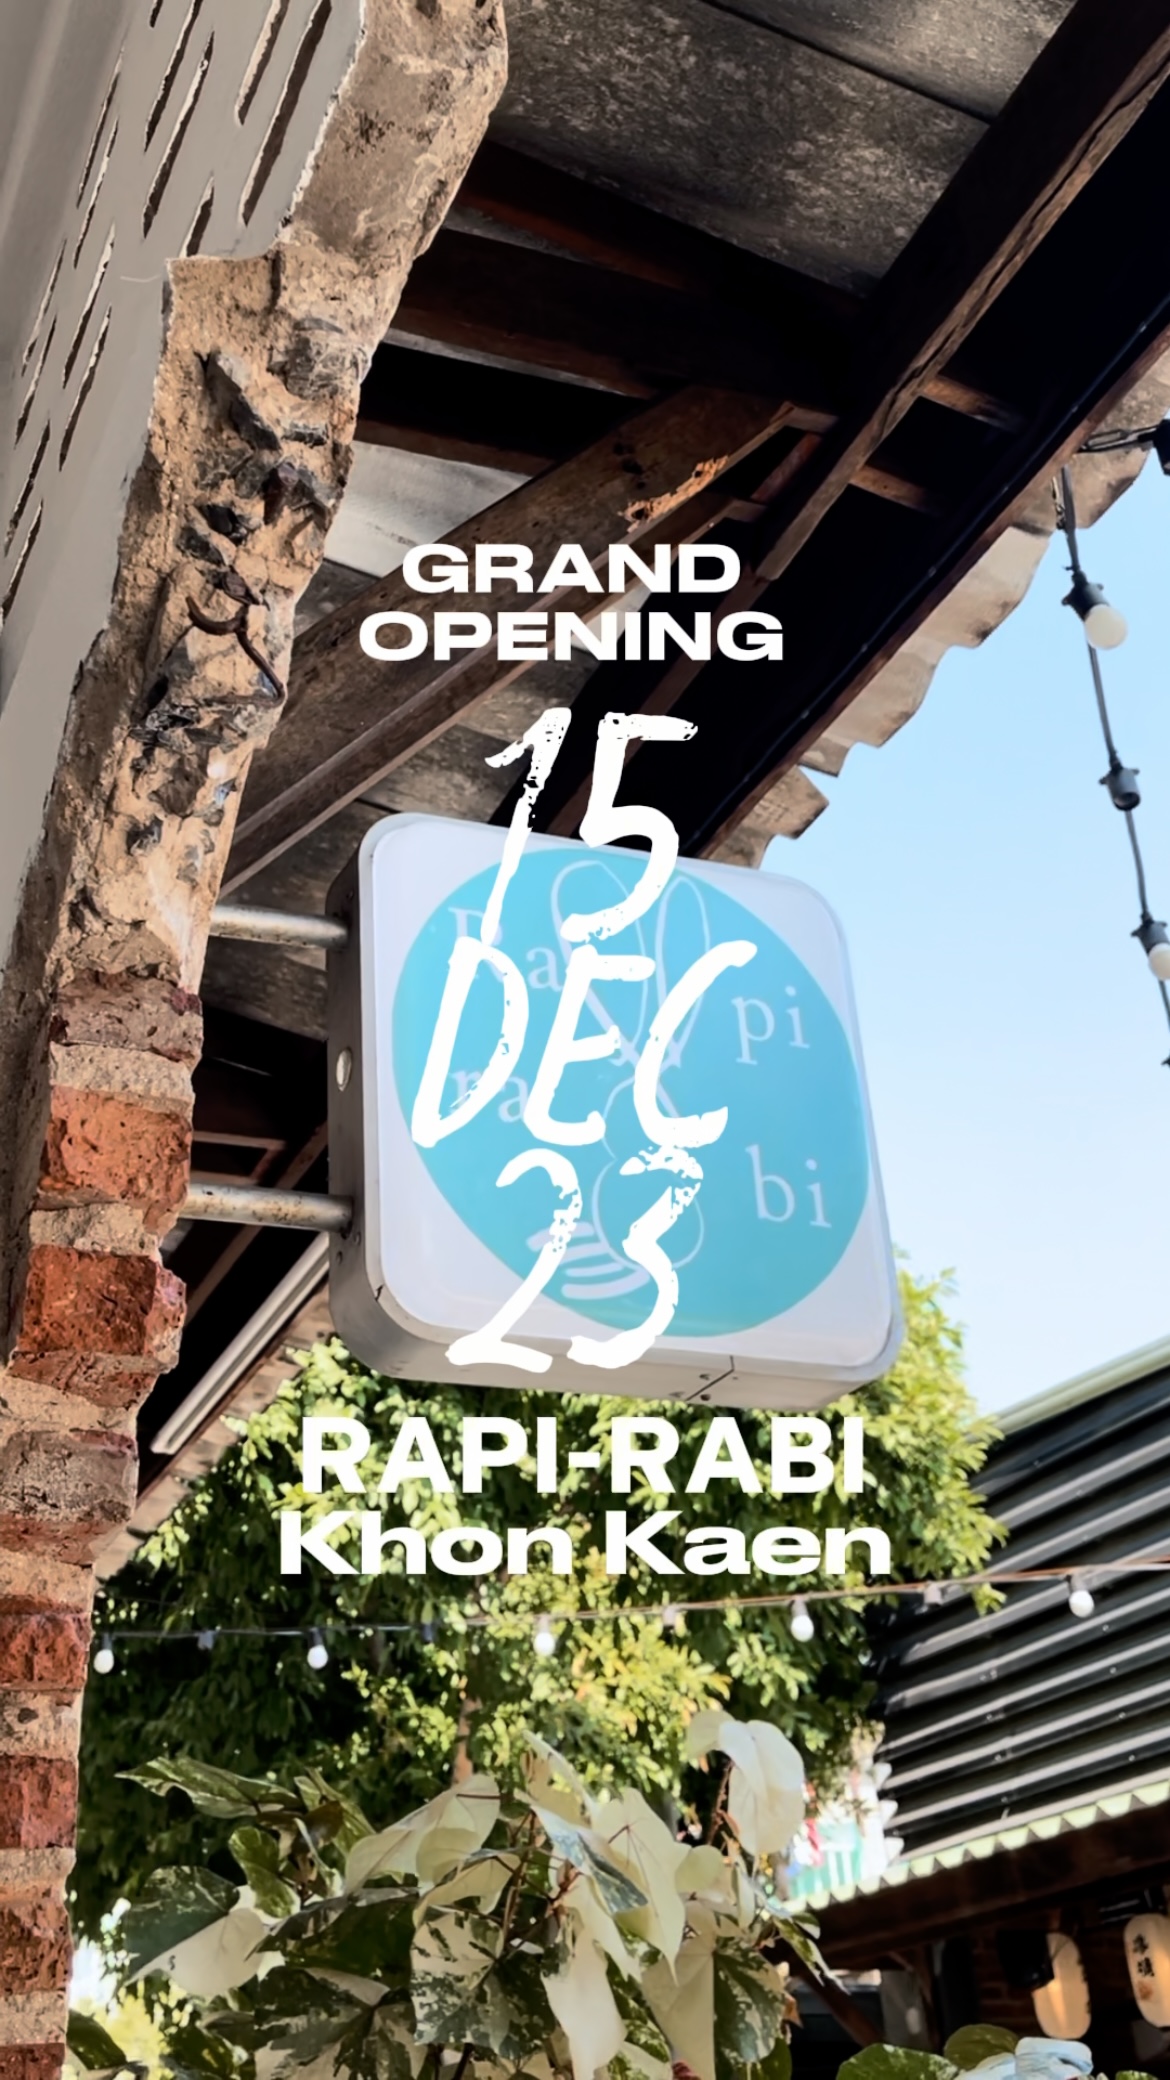 (TH) Grand opening Rapi-rabi Khonkaen 🐇 By Rapi-rabi